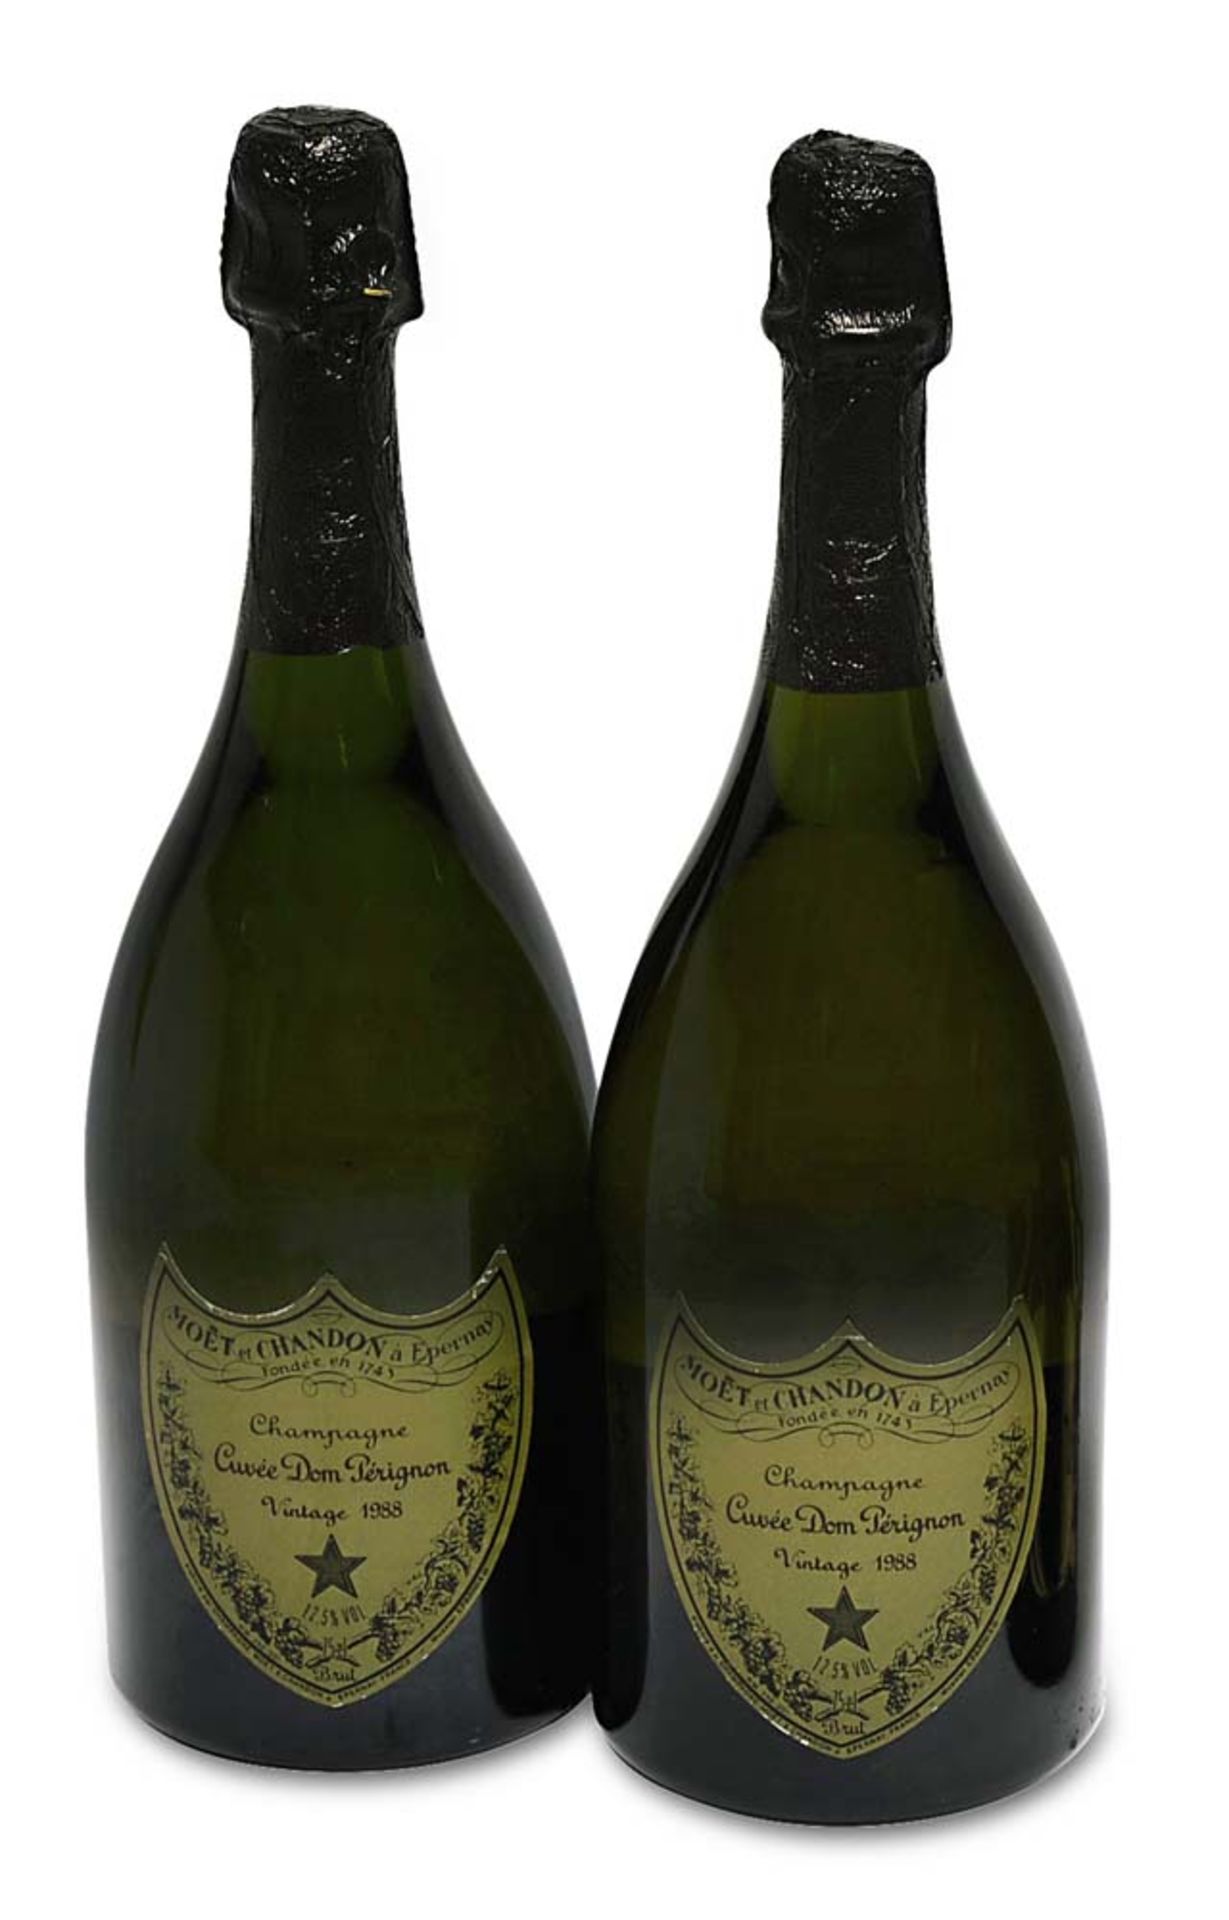 Zwei Flaschen Champagner Dom PerignonChampagne, FrankreichMoet & Chandon à Epernay, Cuvée Dom